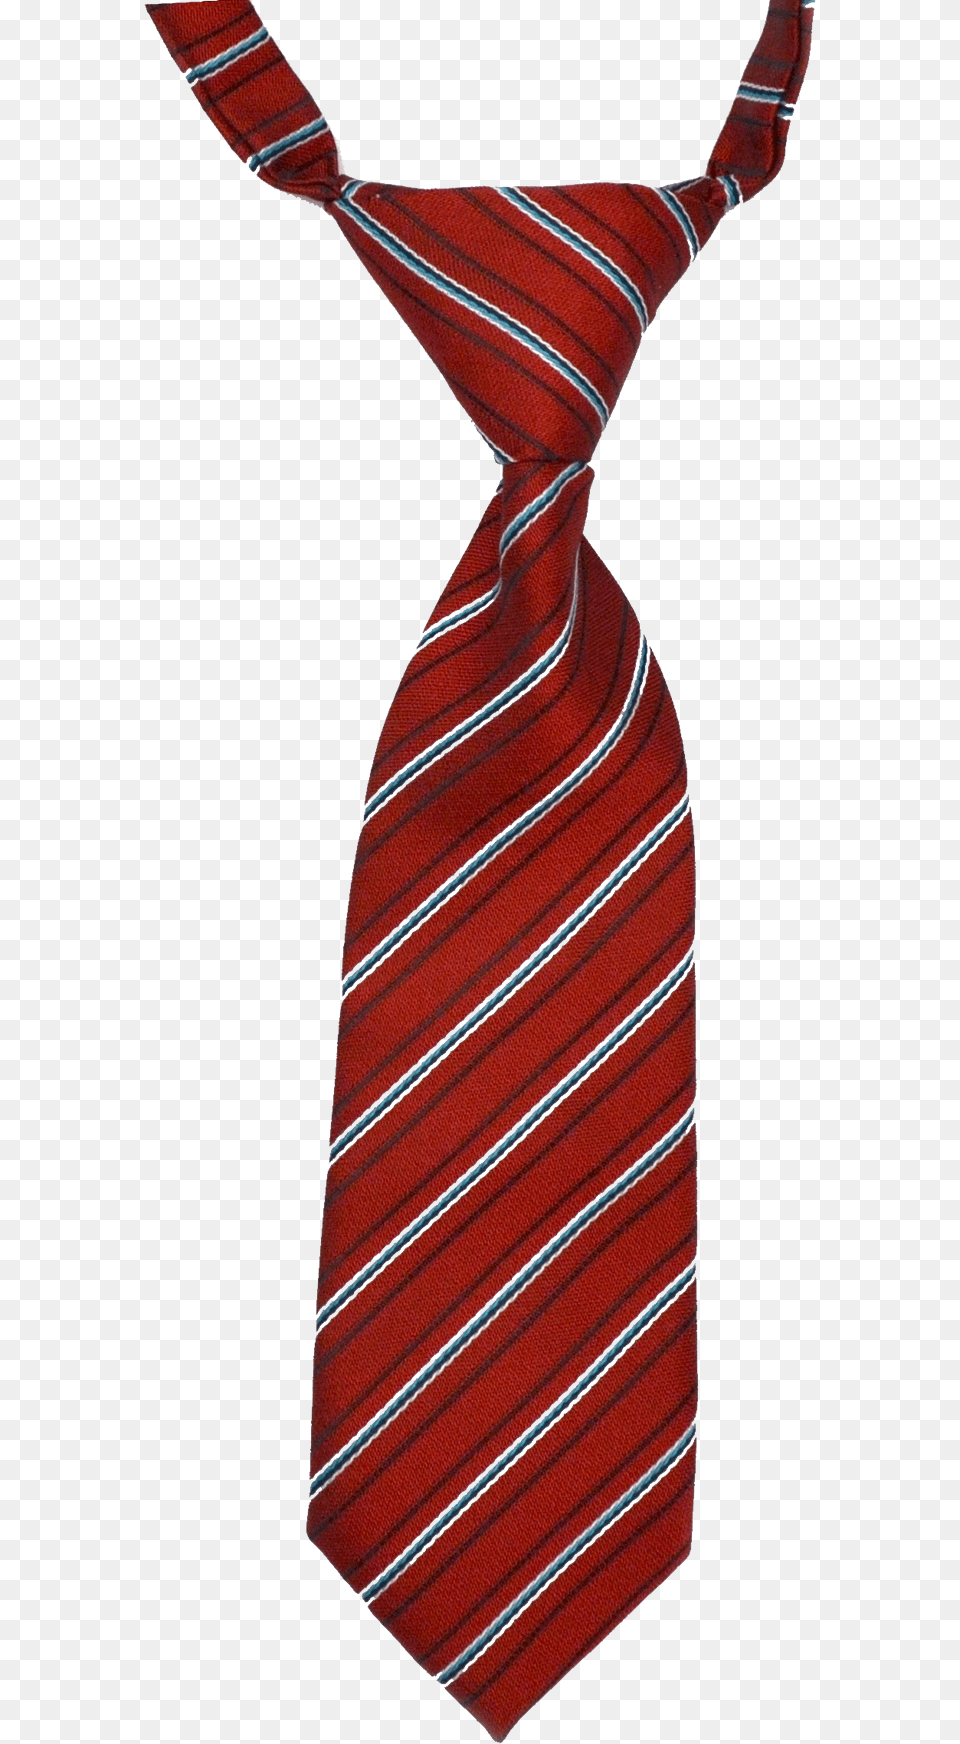 Red Tie Image Tie, Accessories, Formal Wear, Necktie Free Png Download